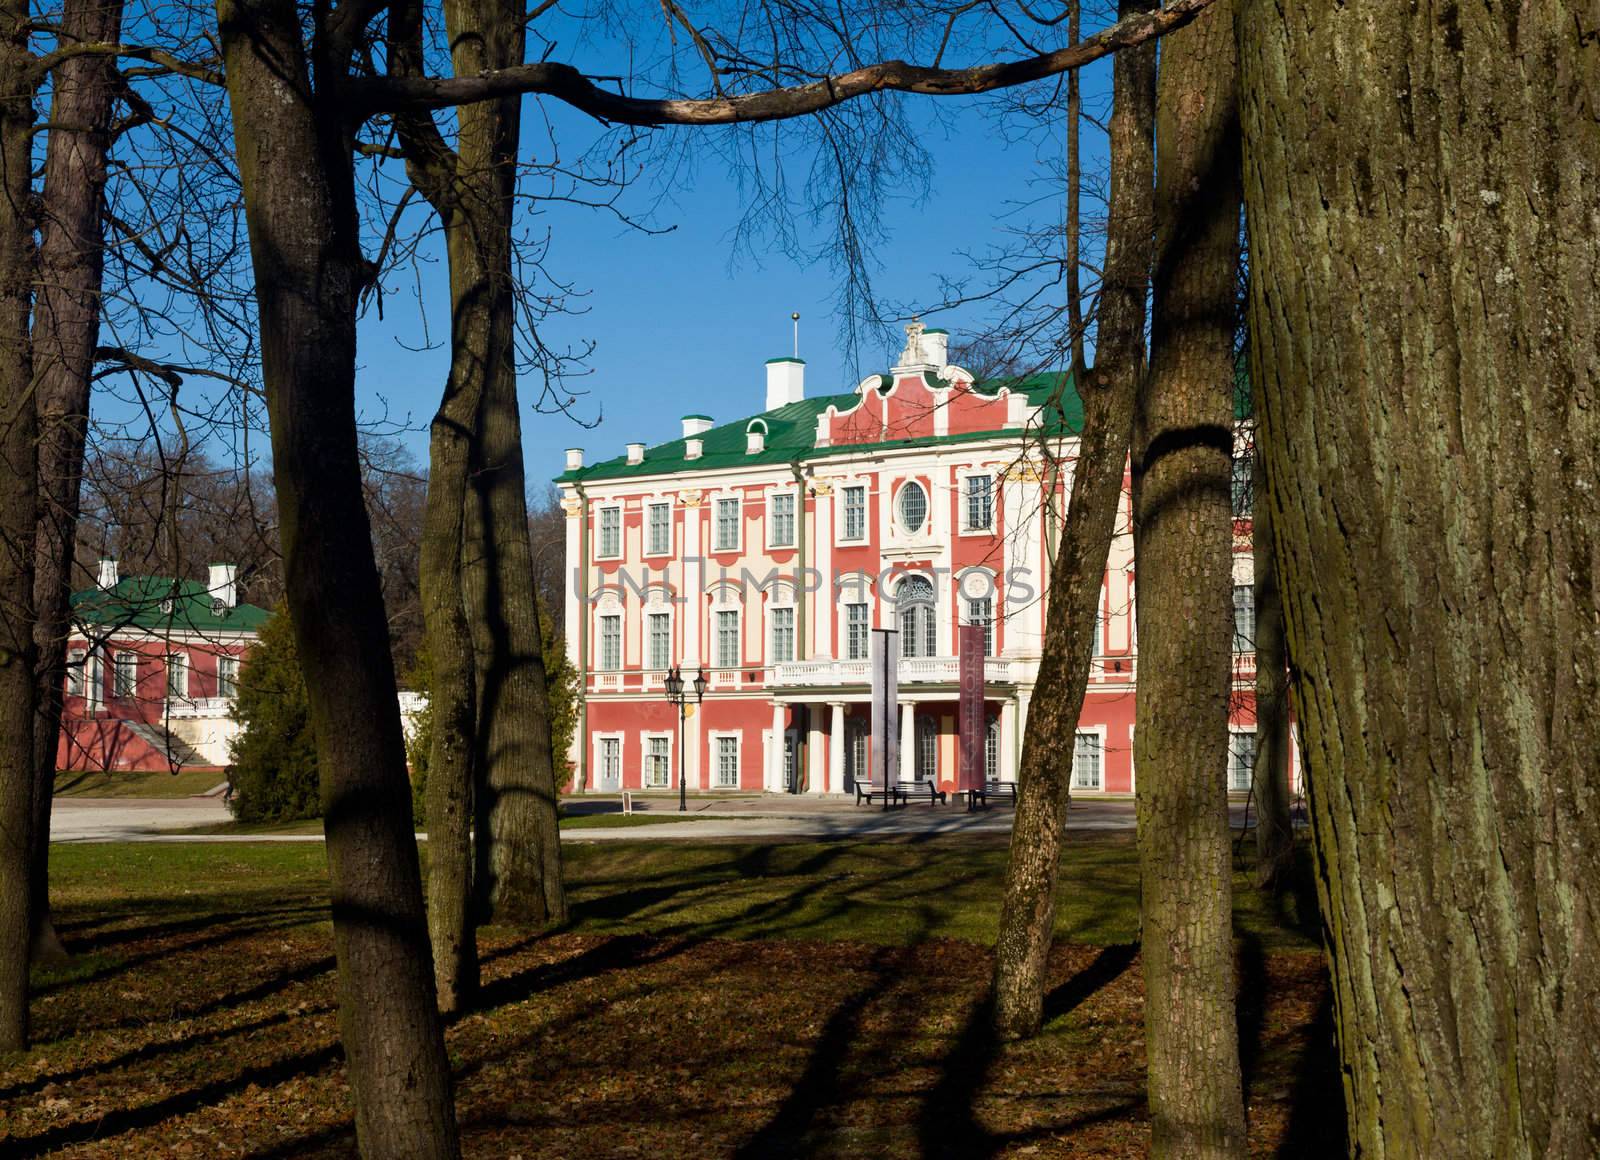 Kadriorg Palace in Tallinn Estonia by steheap